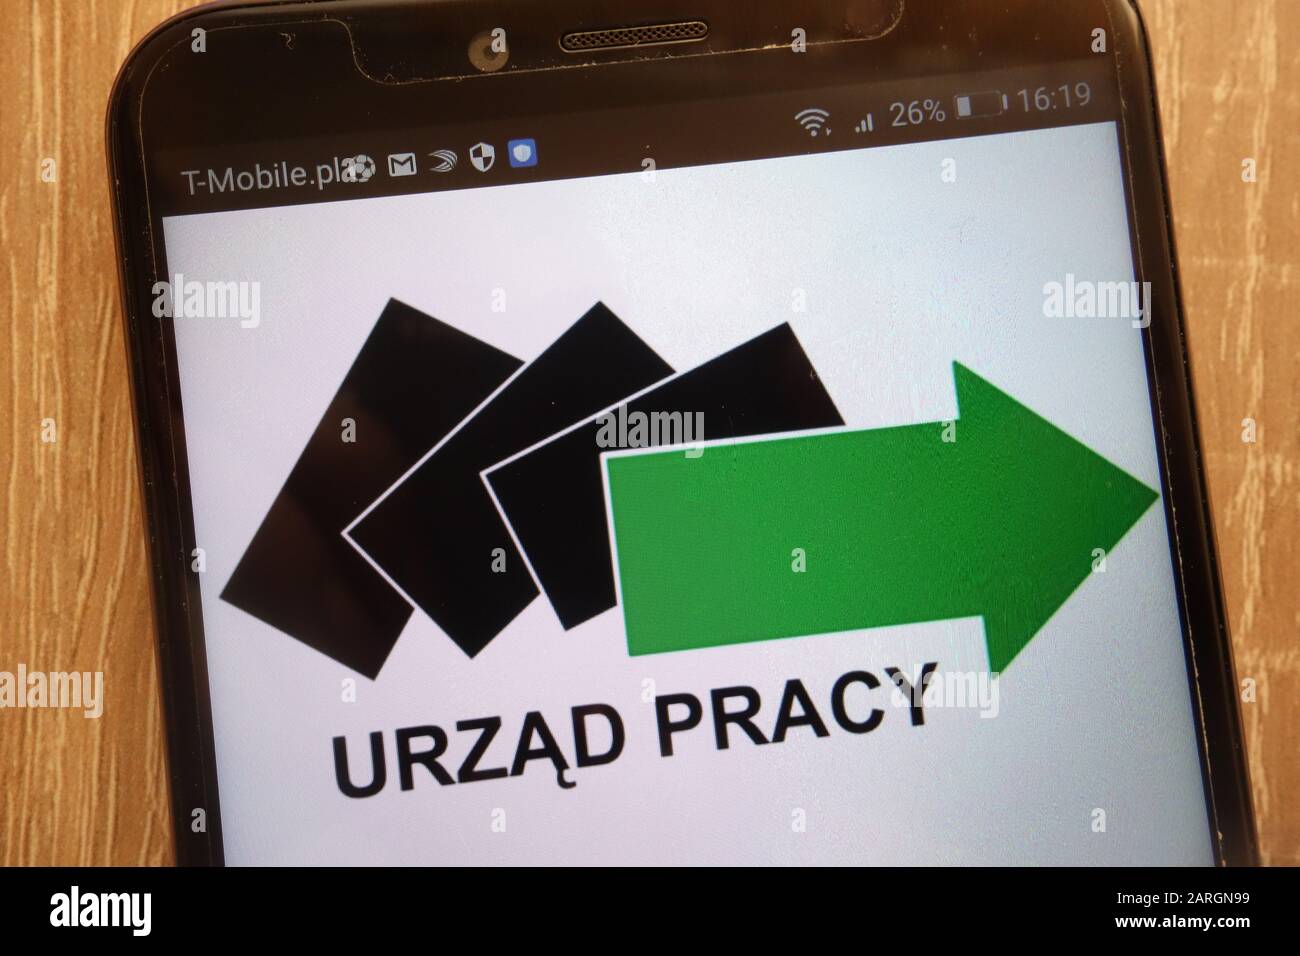 Urzad Pracy logo displayed on a modern smartphone Stock Photo